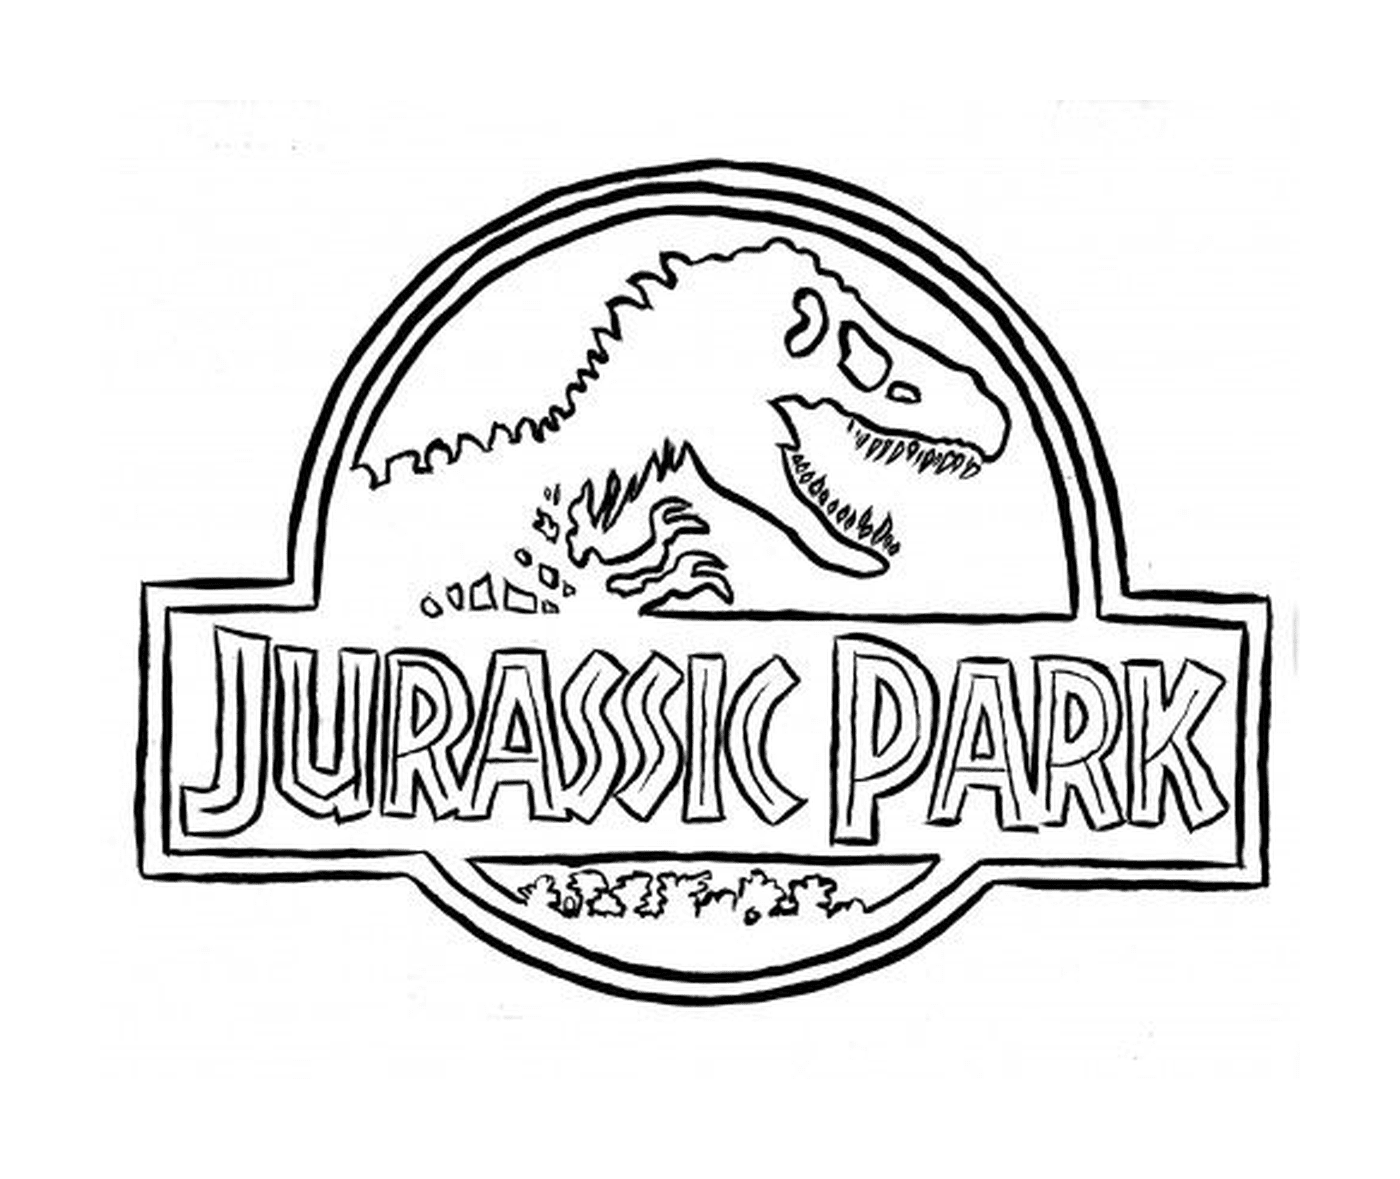  Jurassic Park logo, mythical symbol 